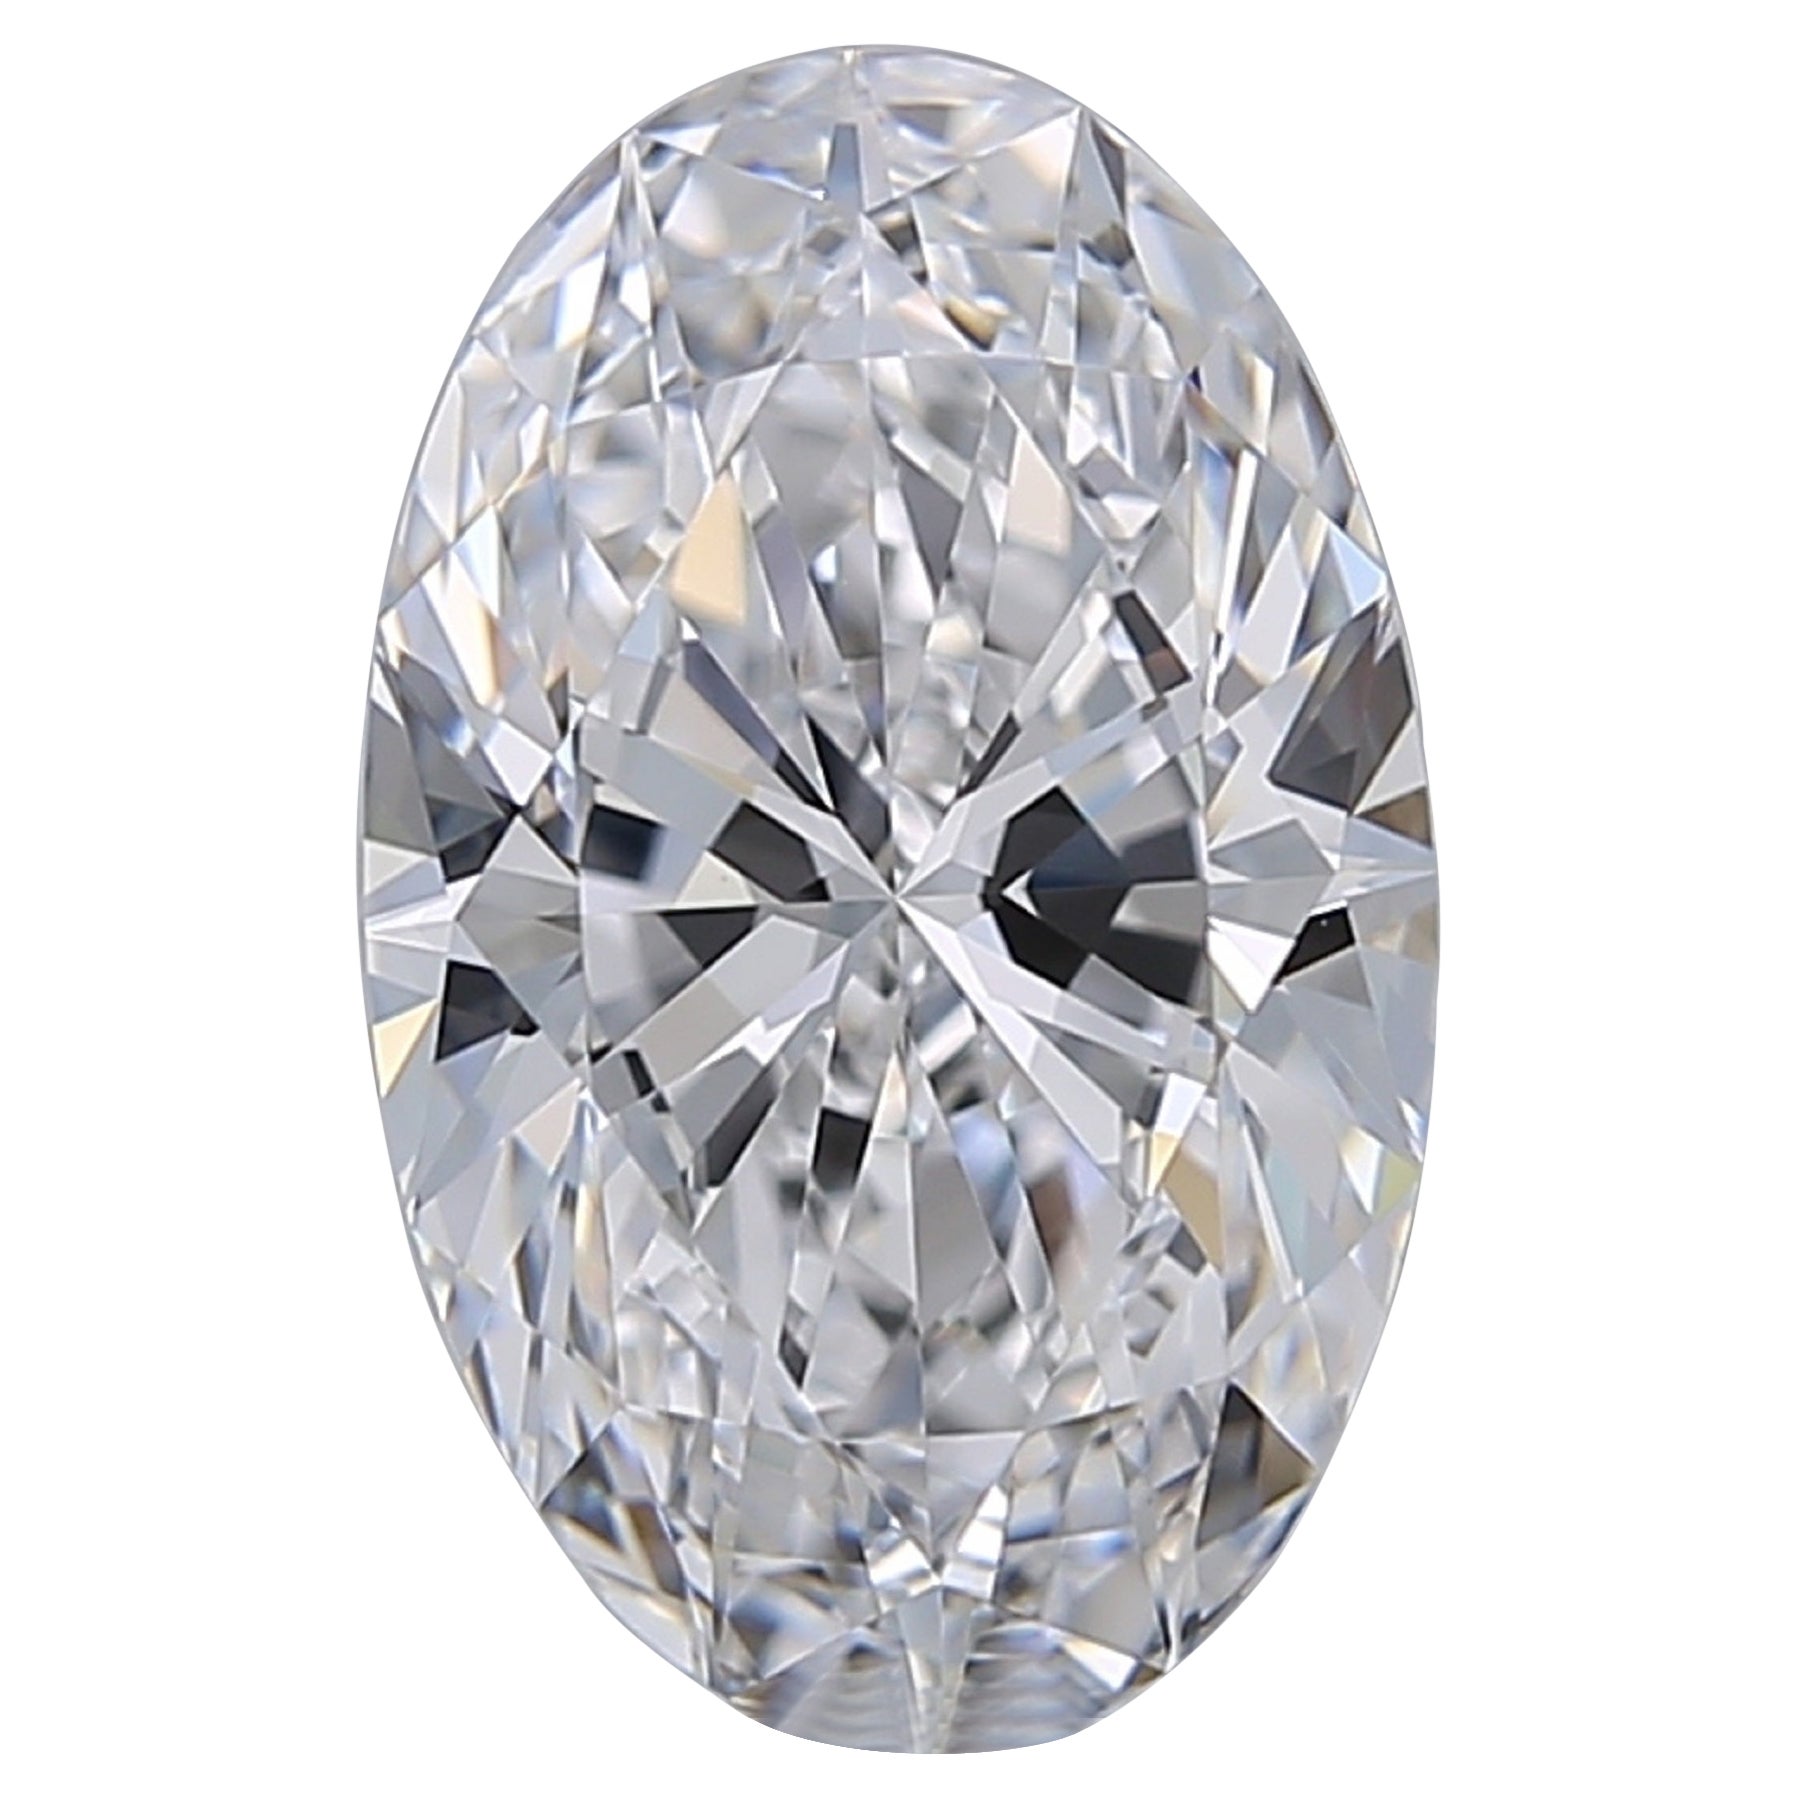 Flawless Type 2A 3.30 Carat Oval Brilliant Cut Diamond Loose Stone